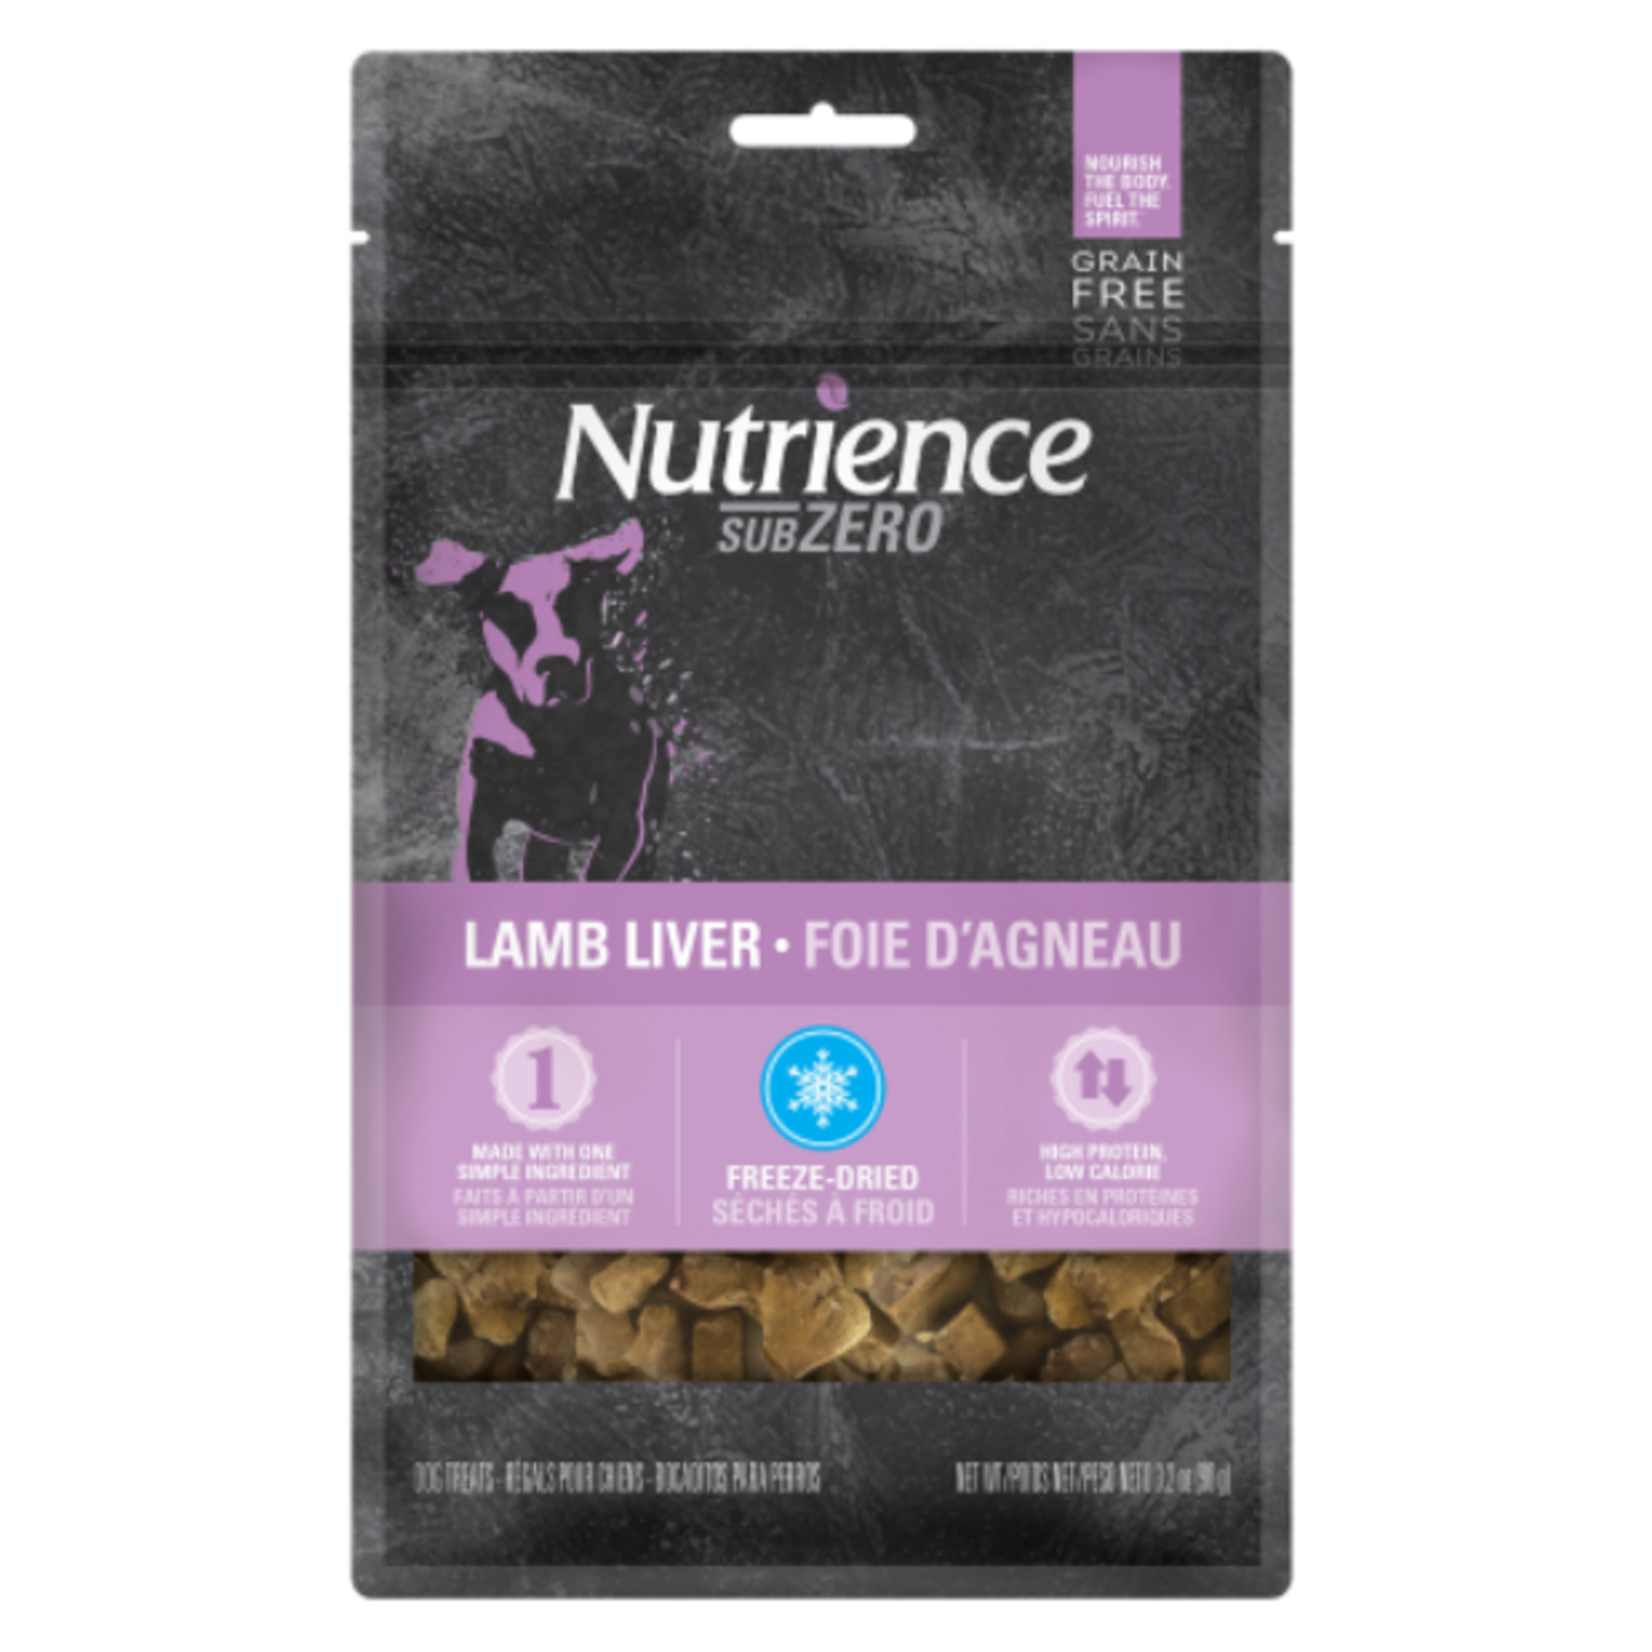 Nutrience Subzero - Freeze Dried - Lamb Liver - G Free - 90 g